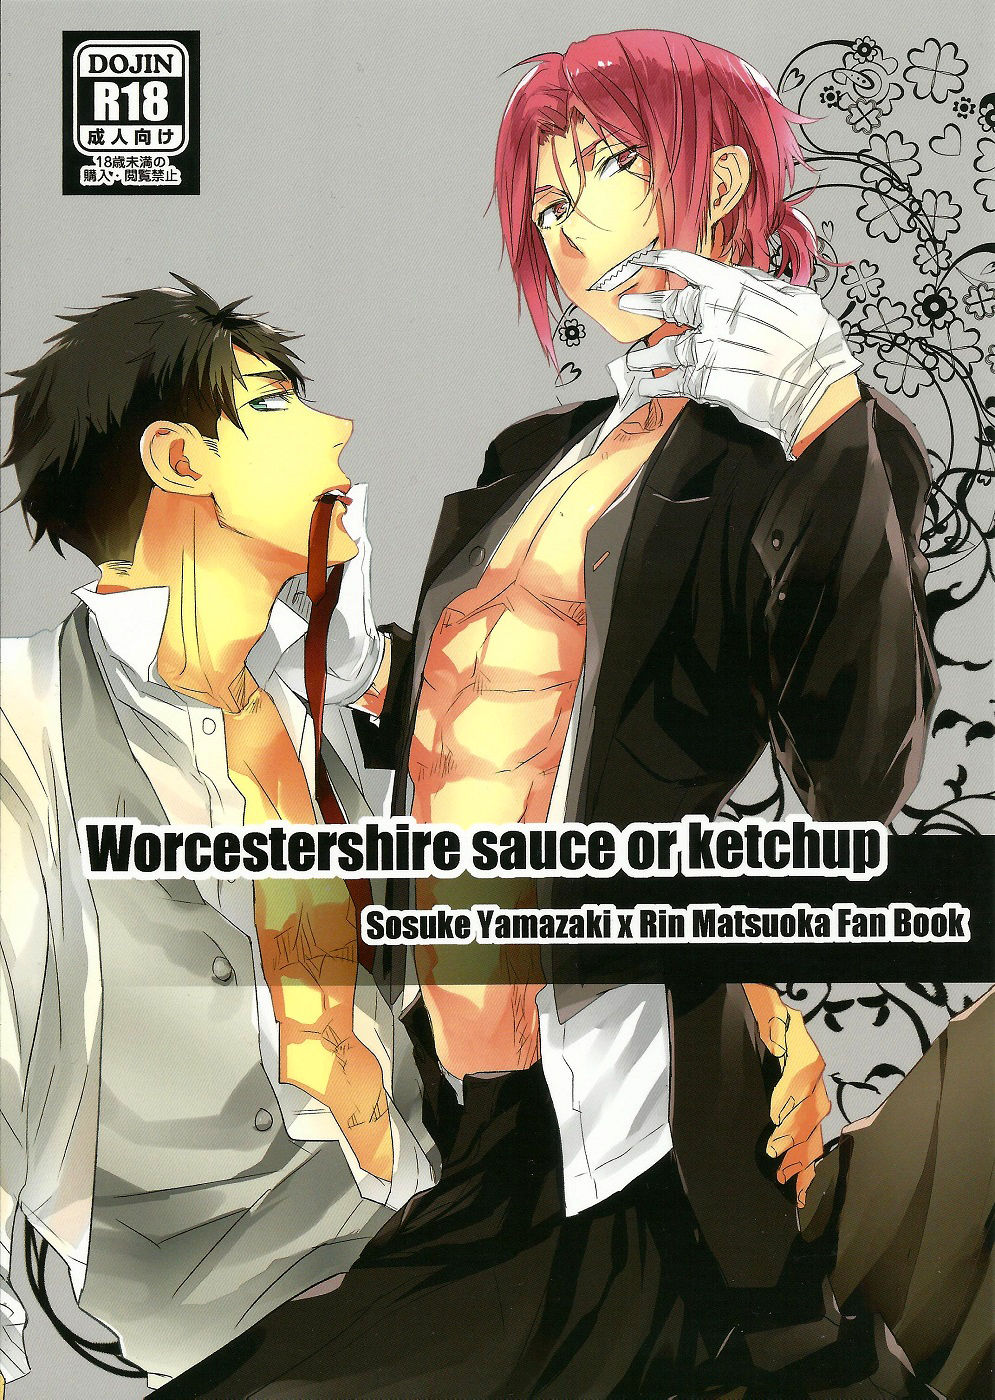 super24 mikadoya mikado yuya worcestershire sauce or ketchup free english ichigo day 00